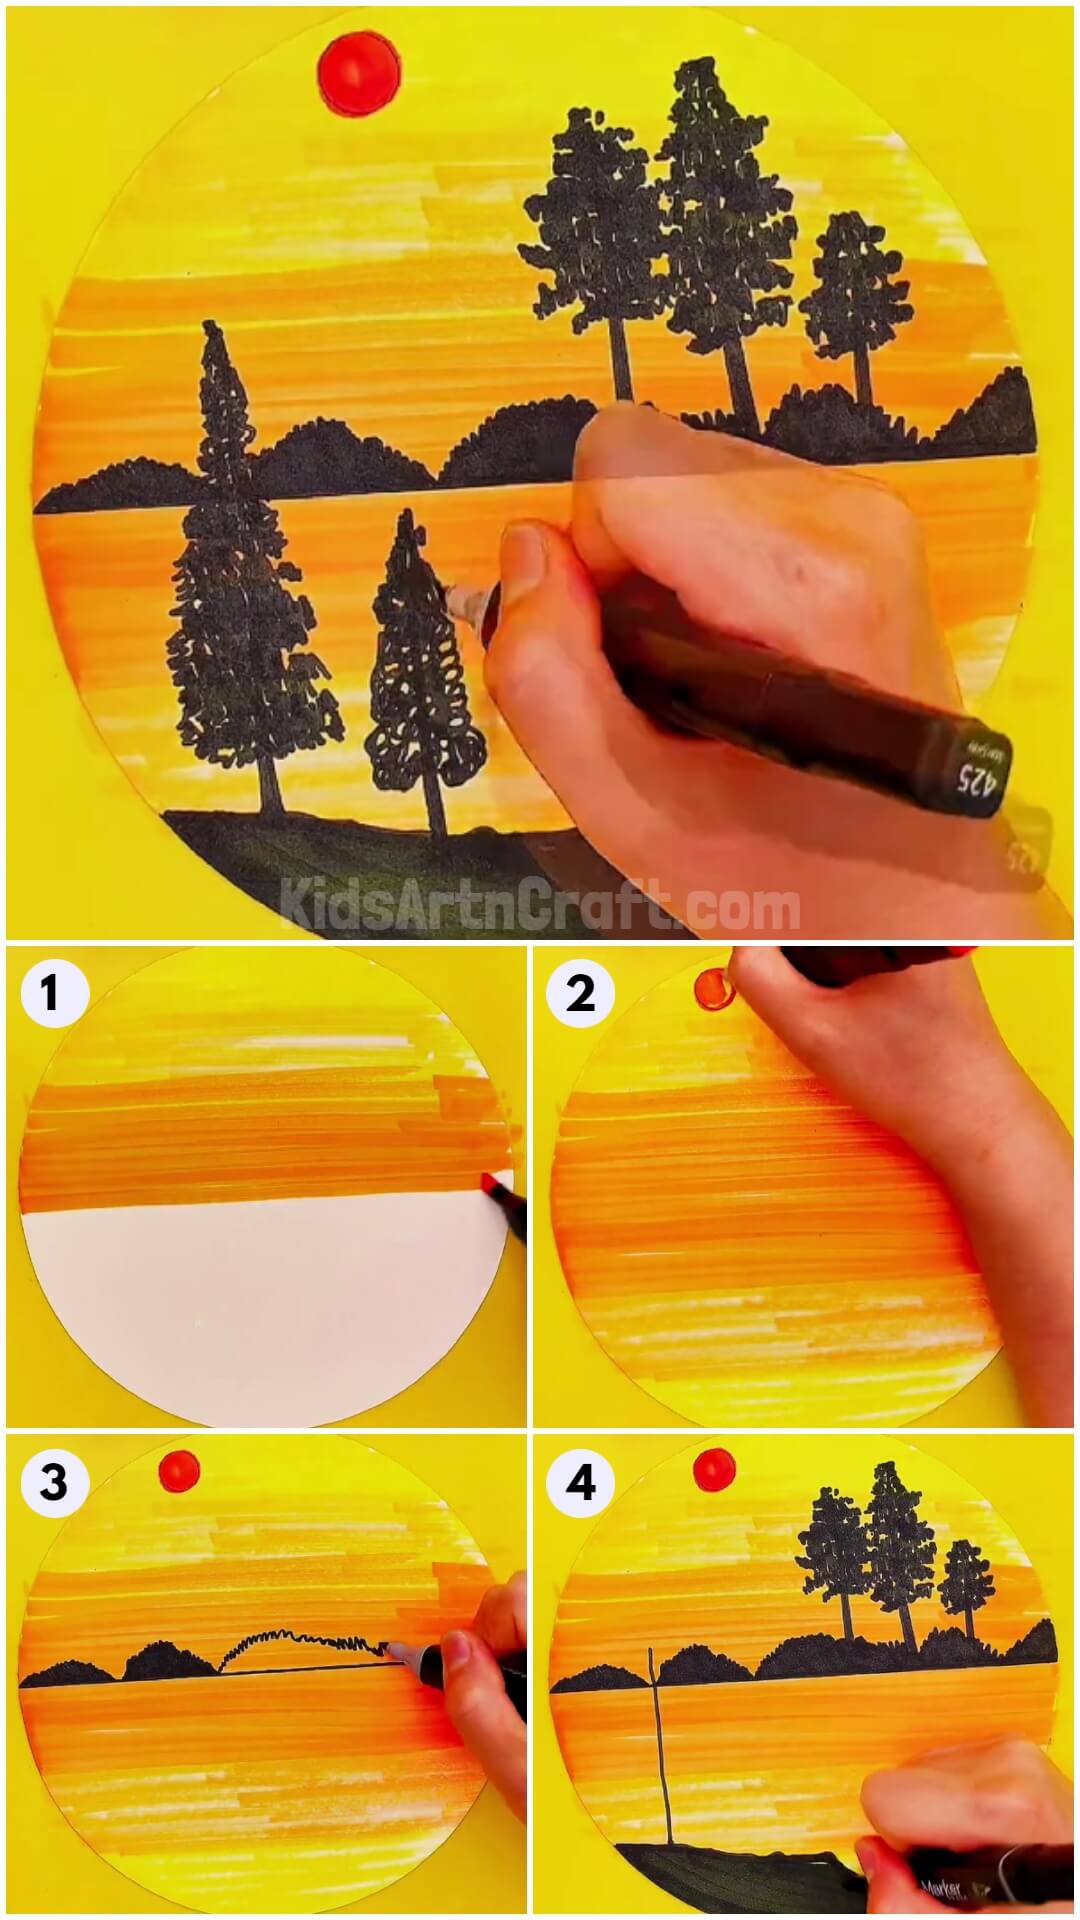 Amazing Sunset Landscape Scenery Drawing Idea For Kids